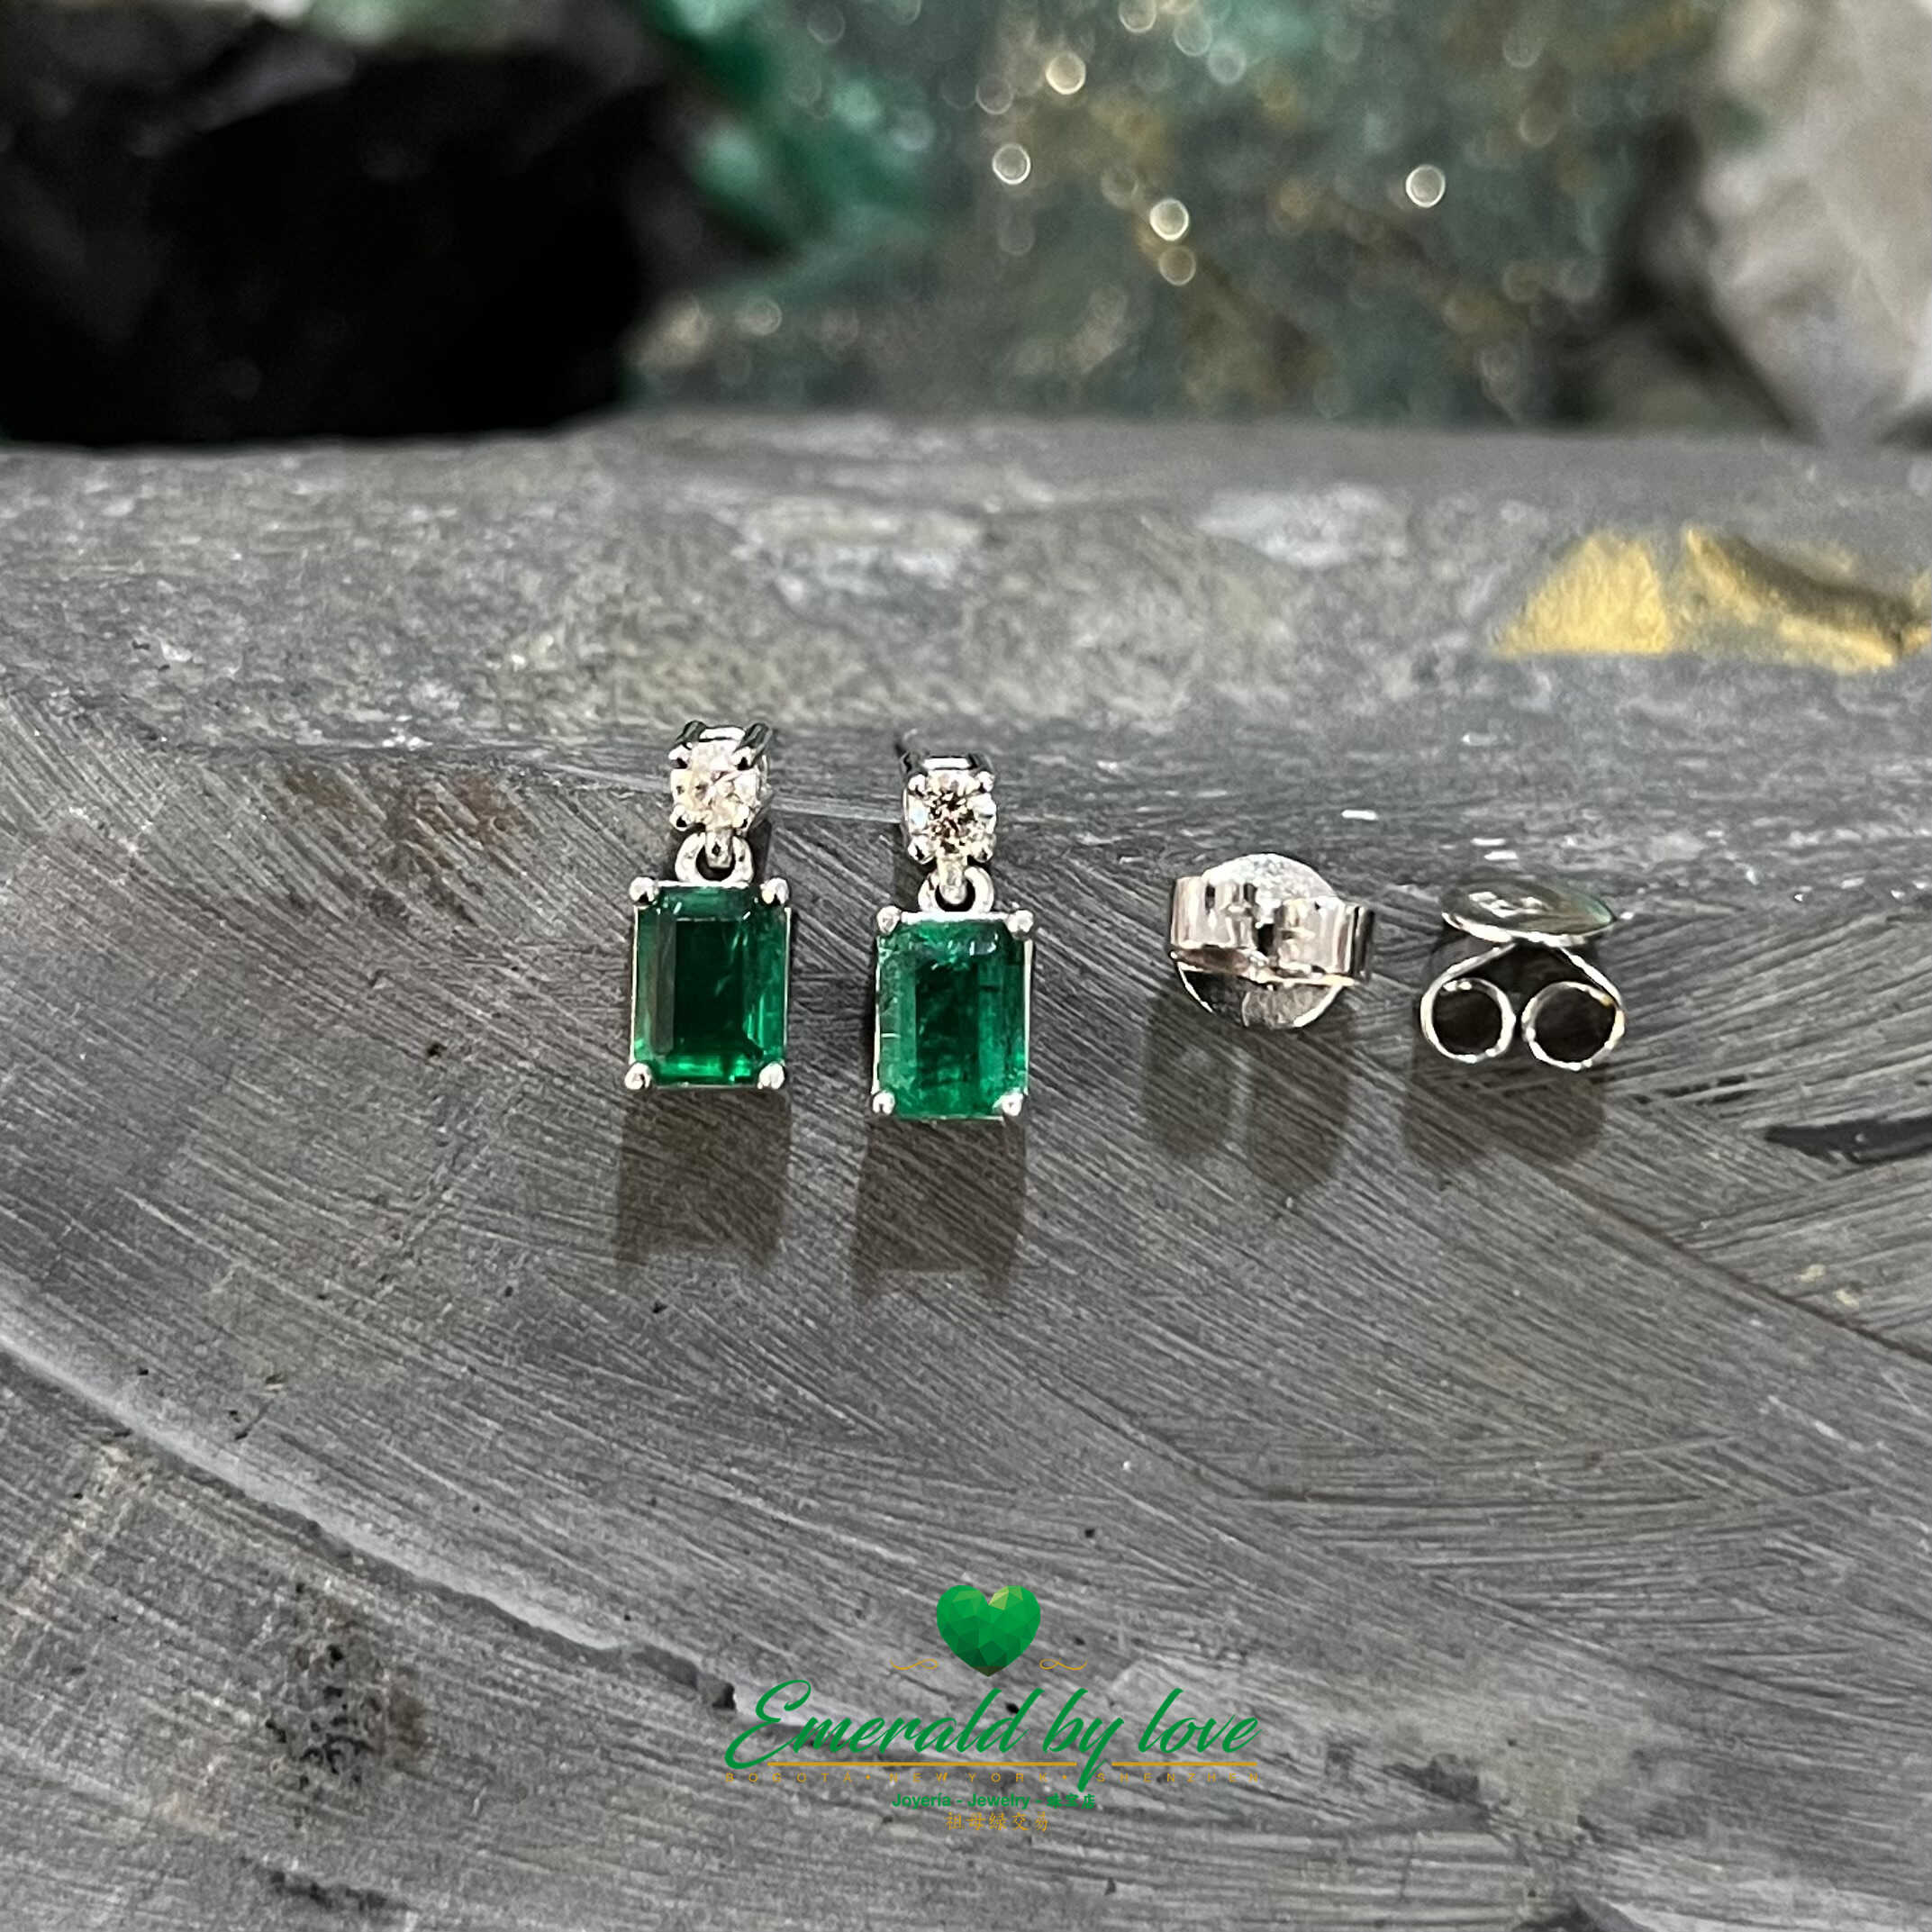 Beautiful Colombian Emerald and Diamond White Gold Earrings - 1.46 Ct Emerald Cut Gems